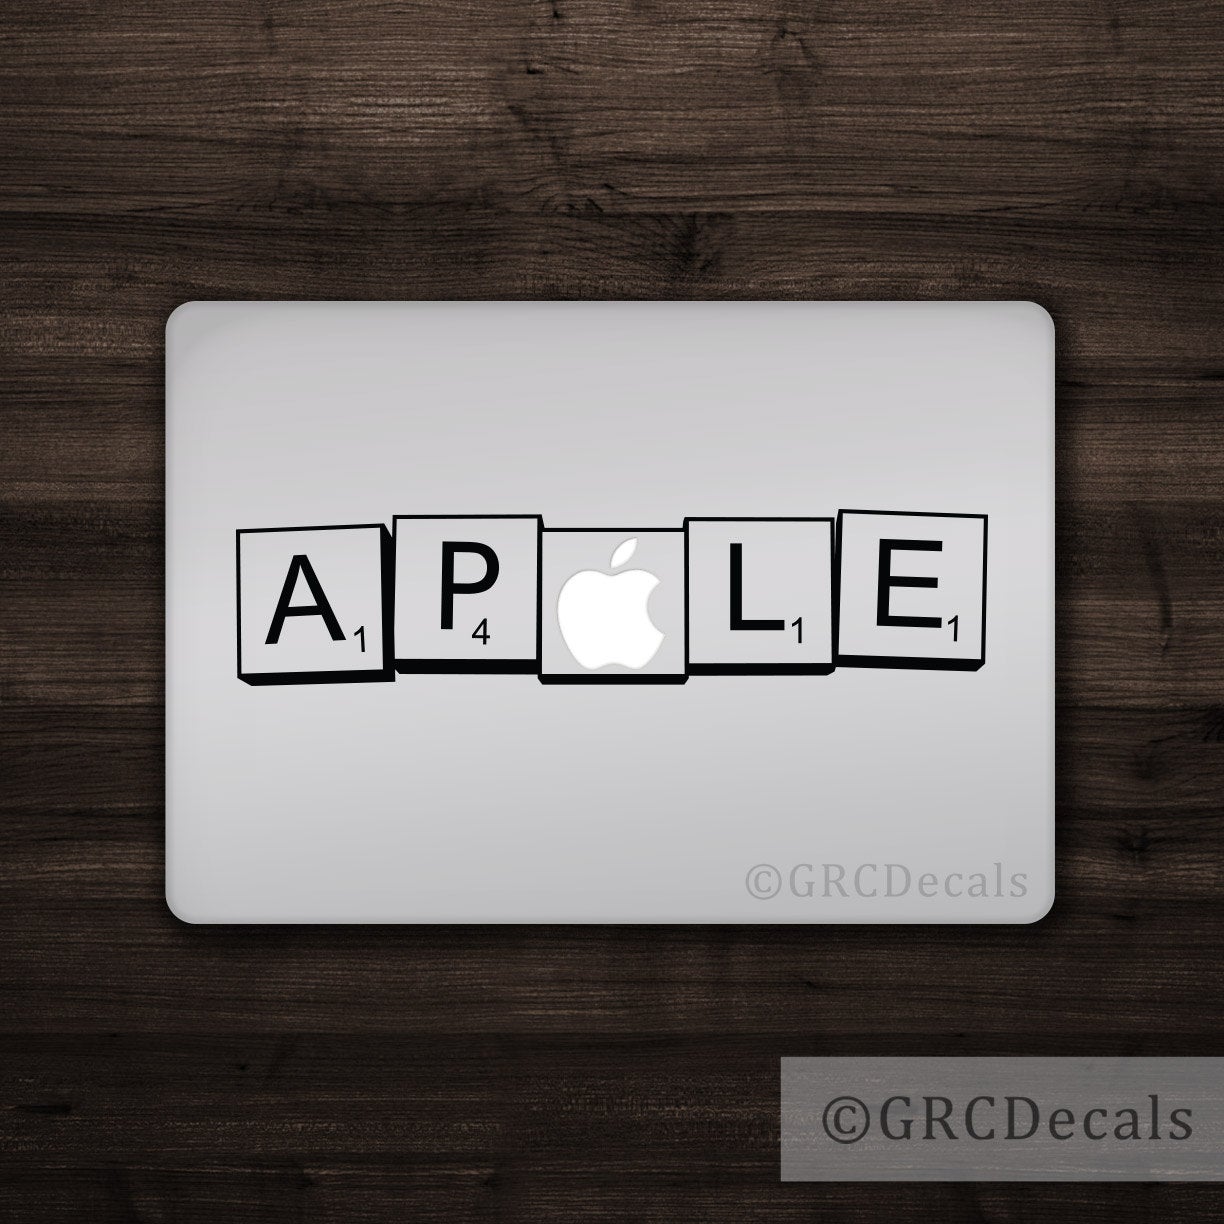 Scrabble For Mac